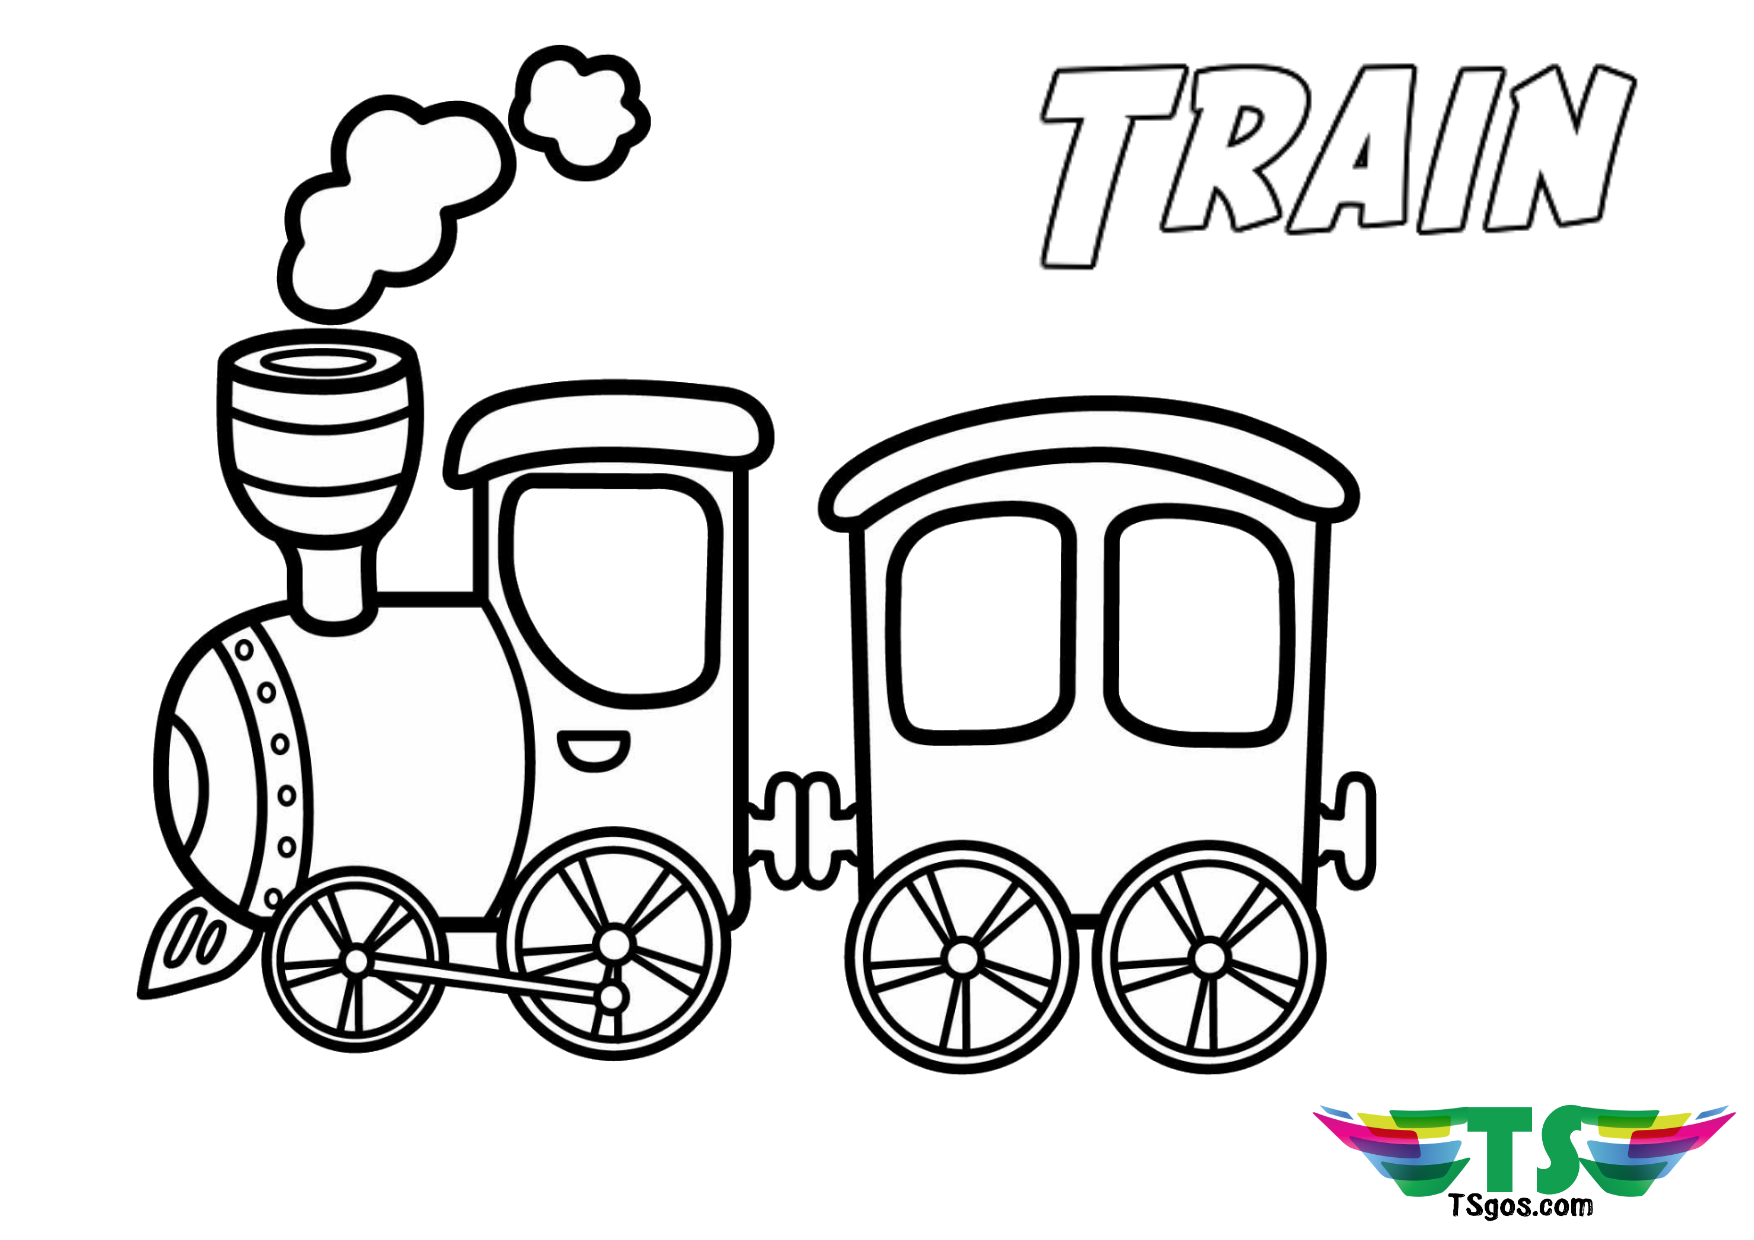 Train coloring page for preschool and toddlers   TSgos.com   TSgos.com